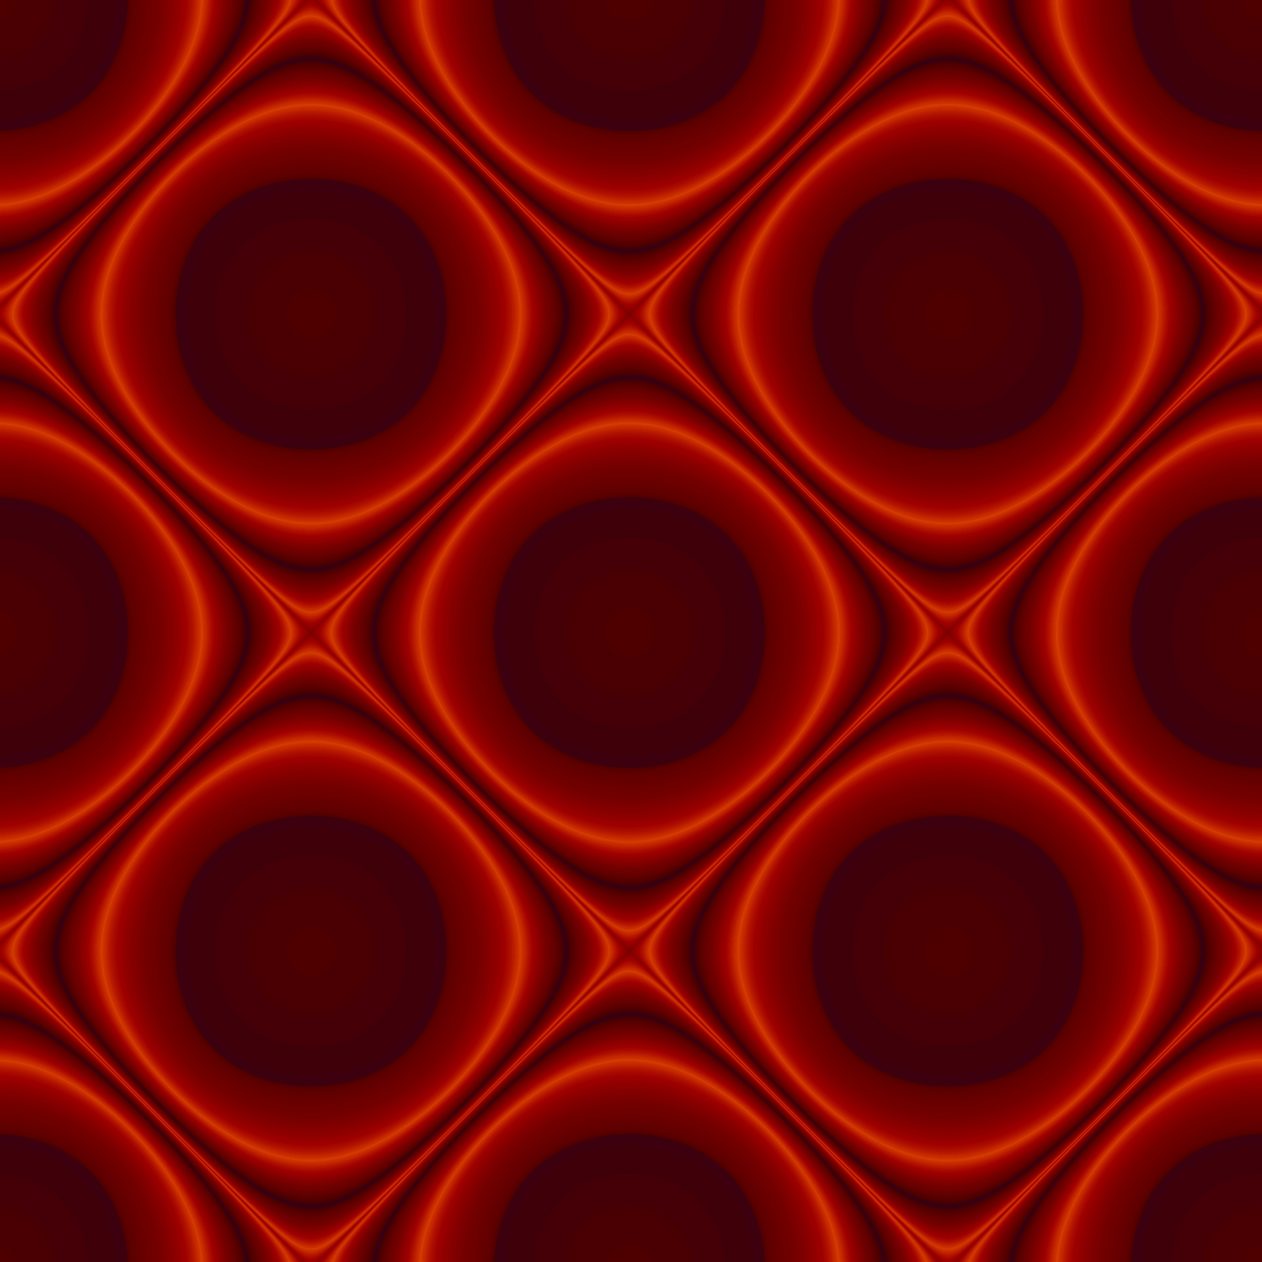 1262x1262 Parallax wallpaper 4k Abstract Pattern Design Red Ipad Wallpaper 1262x1262 pixels resolution